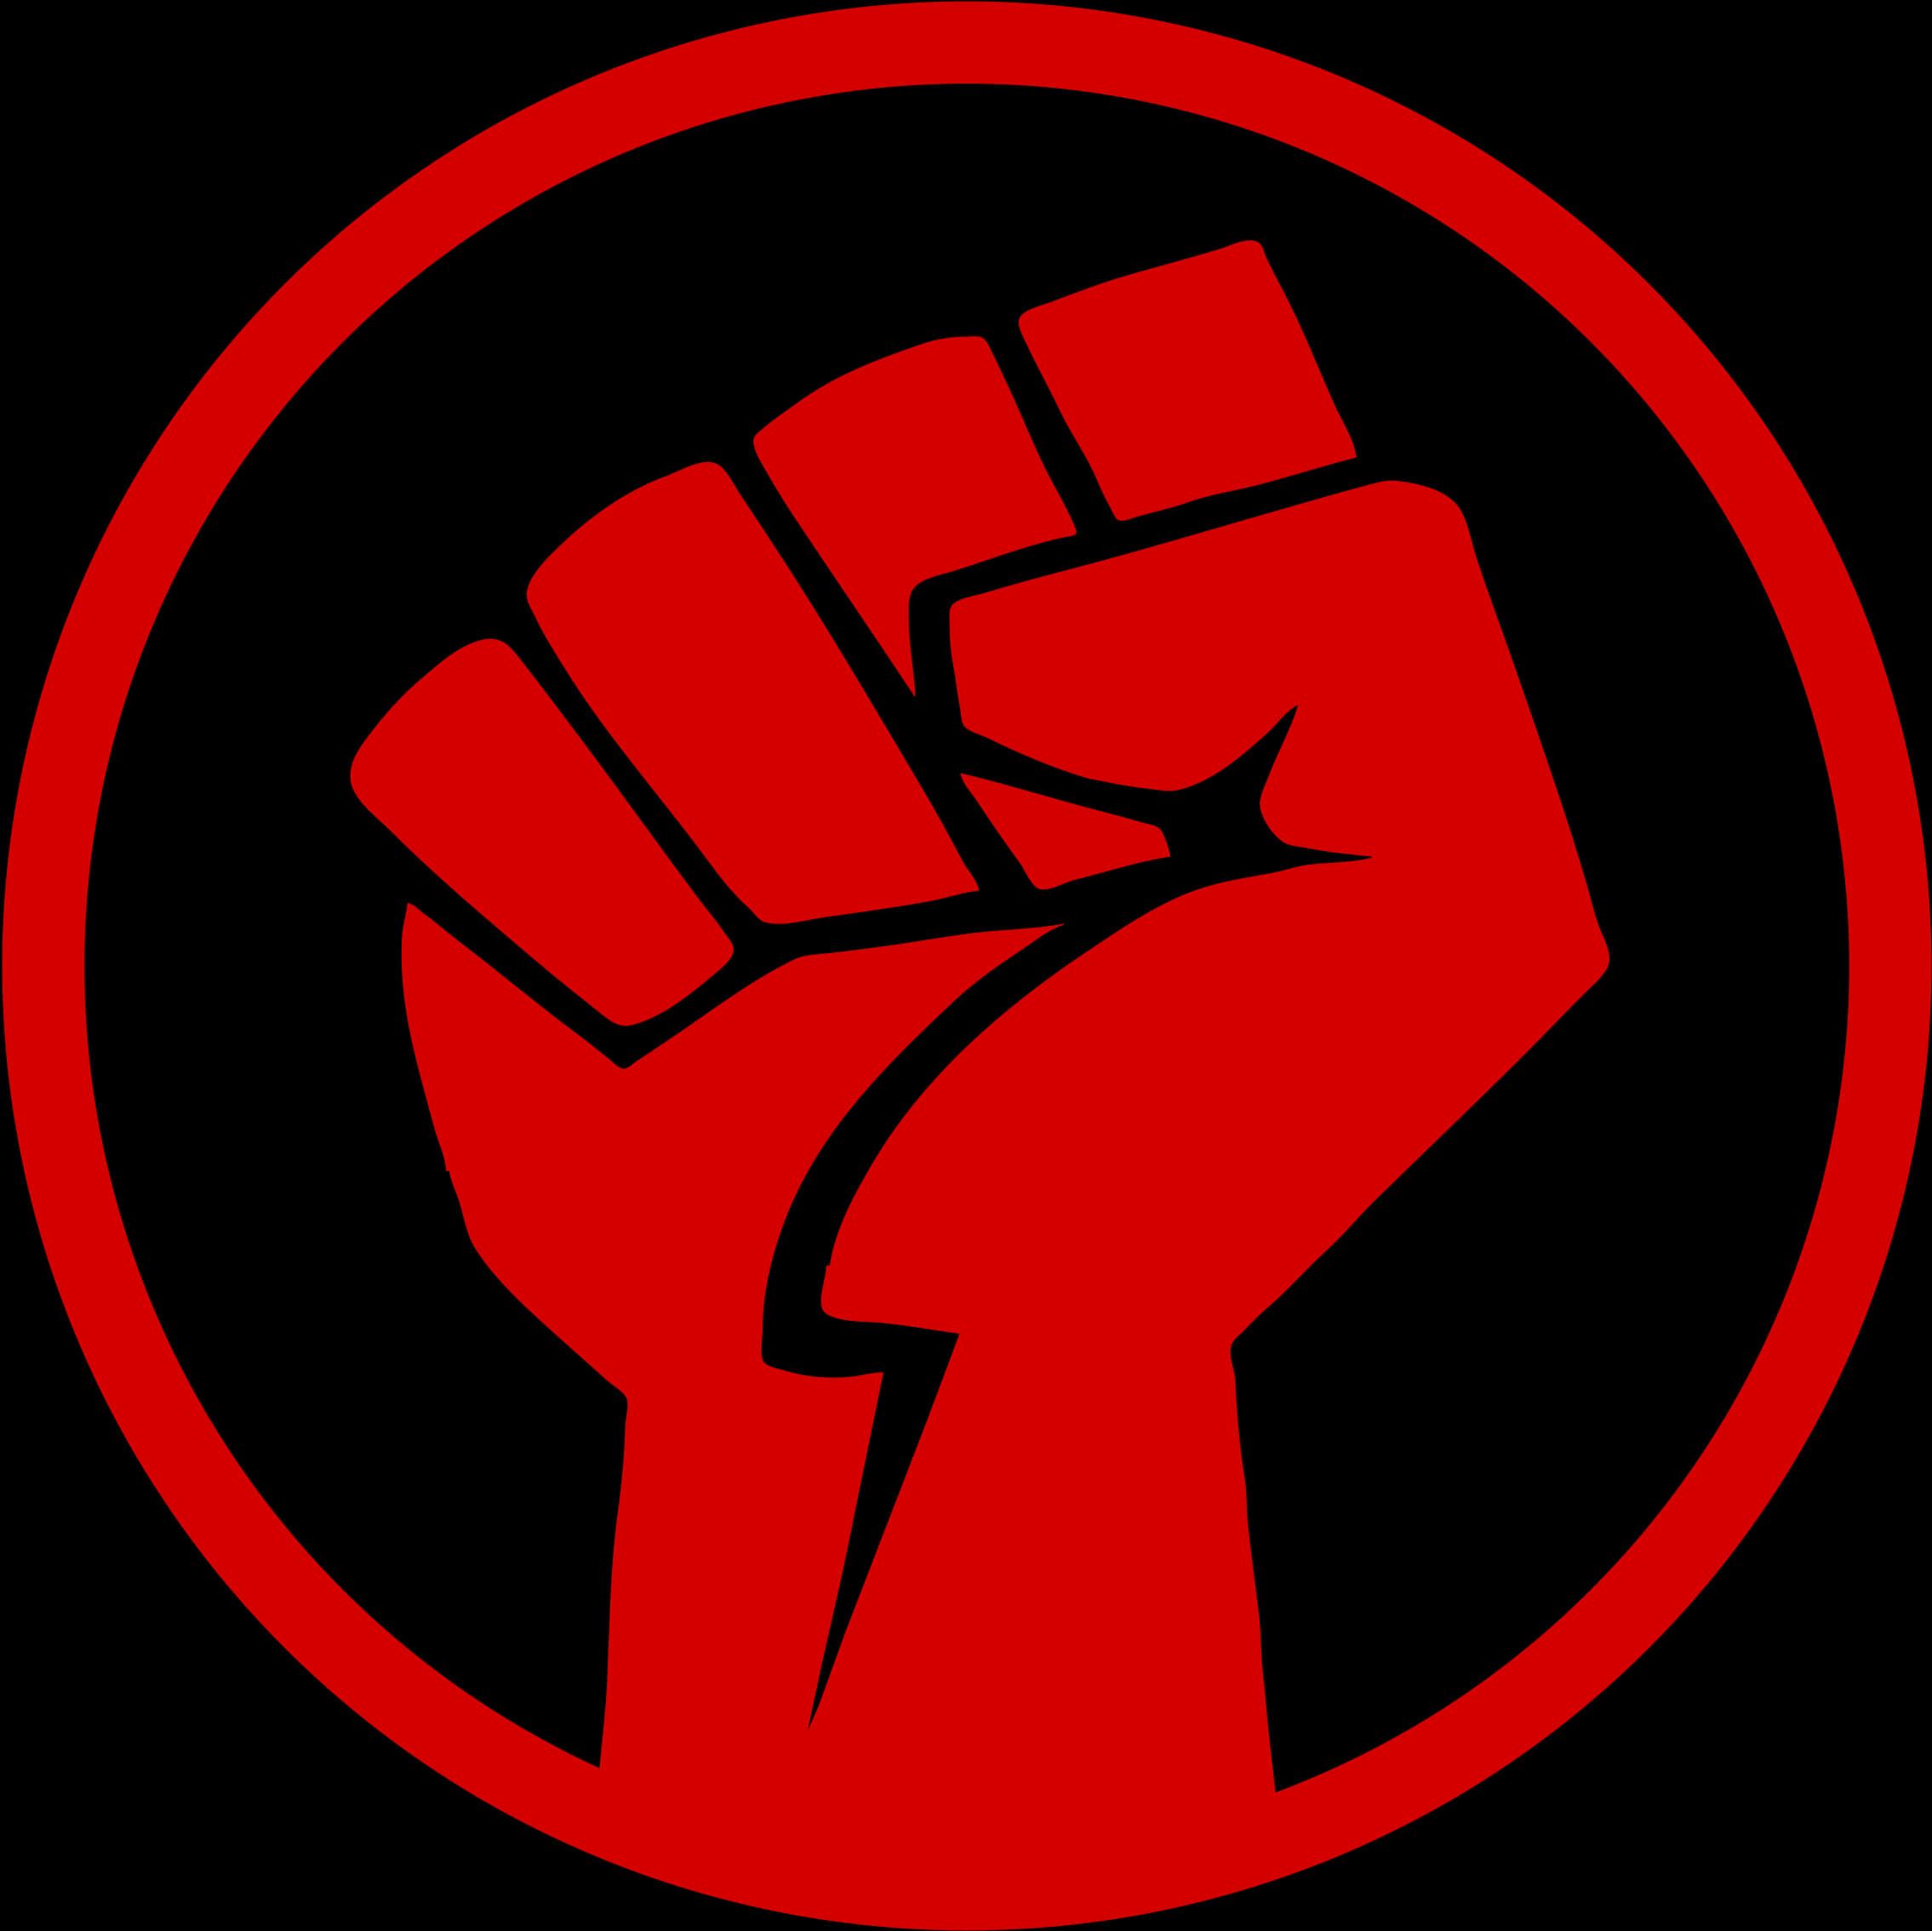 Raised Fist Icon Redand Black PNG